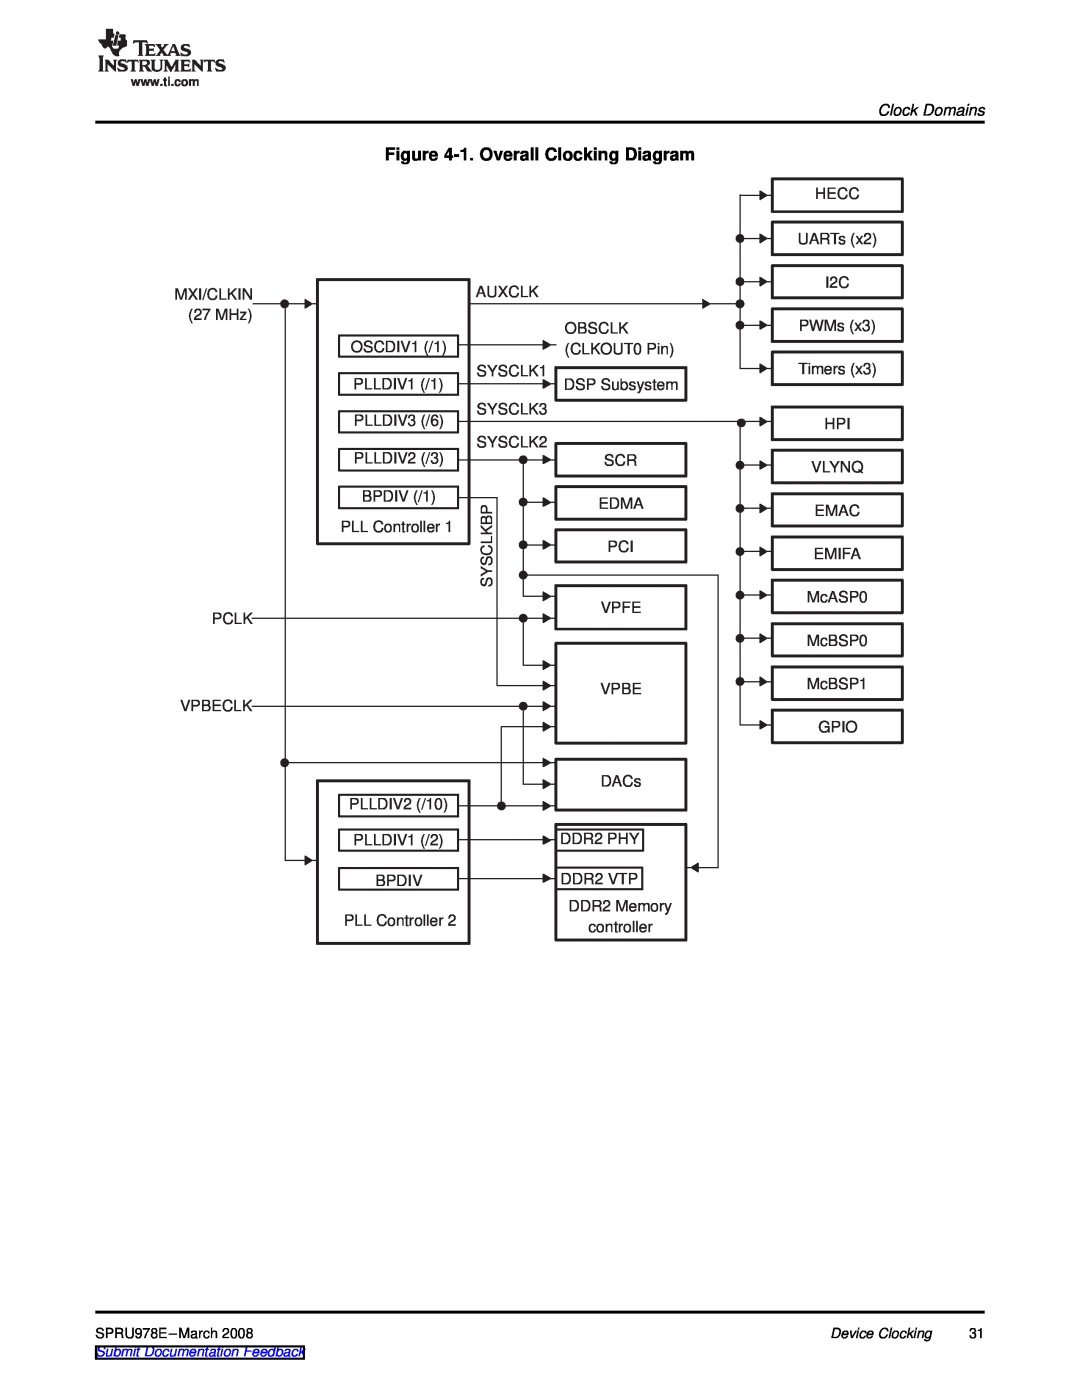 Texas Instruments TMS320DM643x manual 1. Overall Clocking Diagram, Clock Domains 